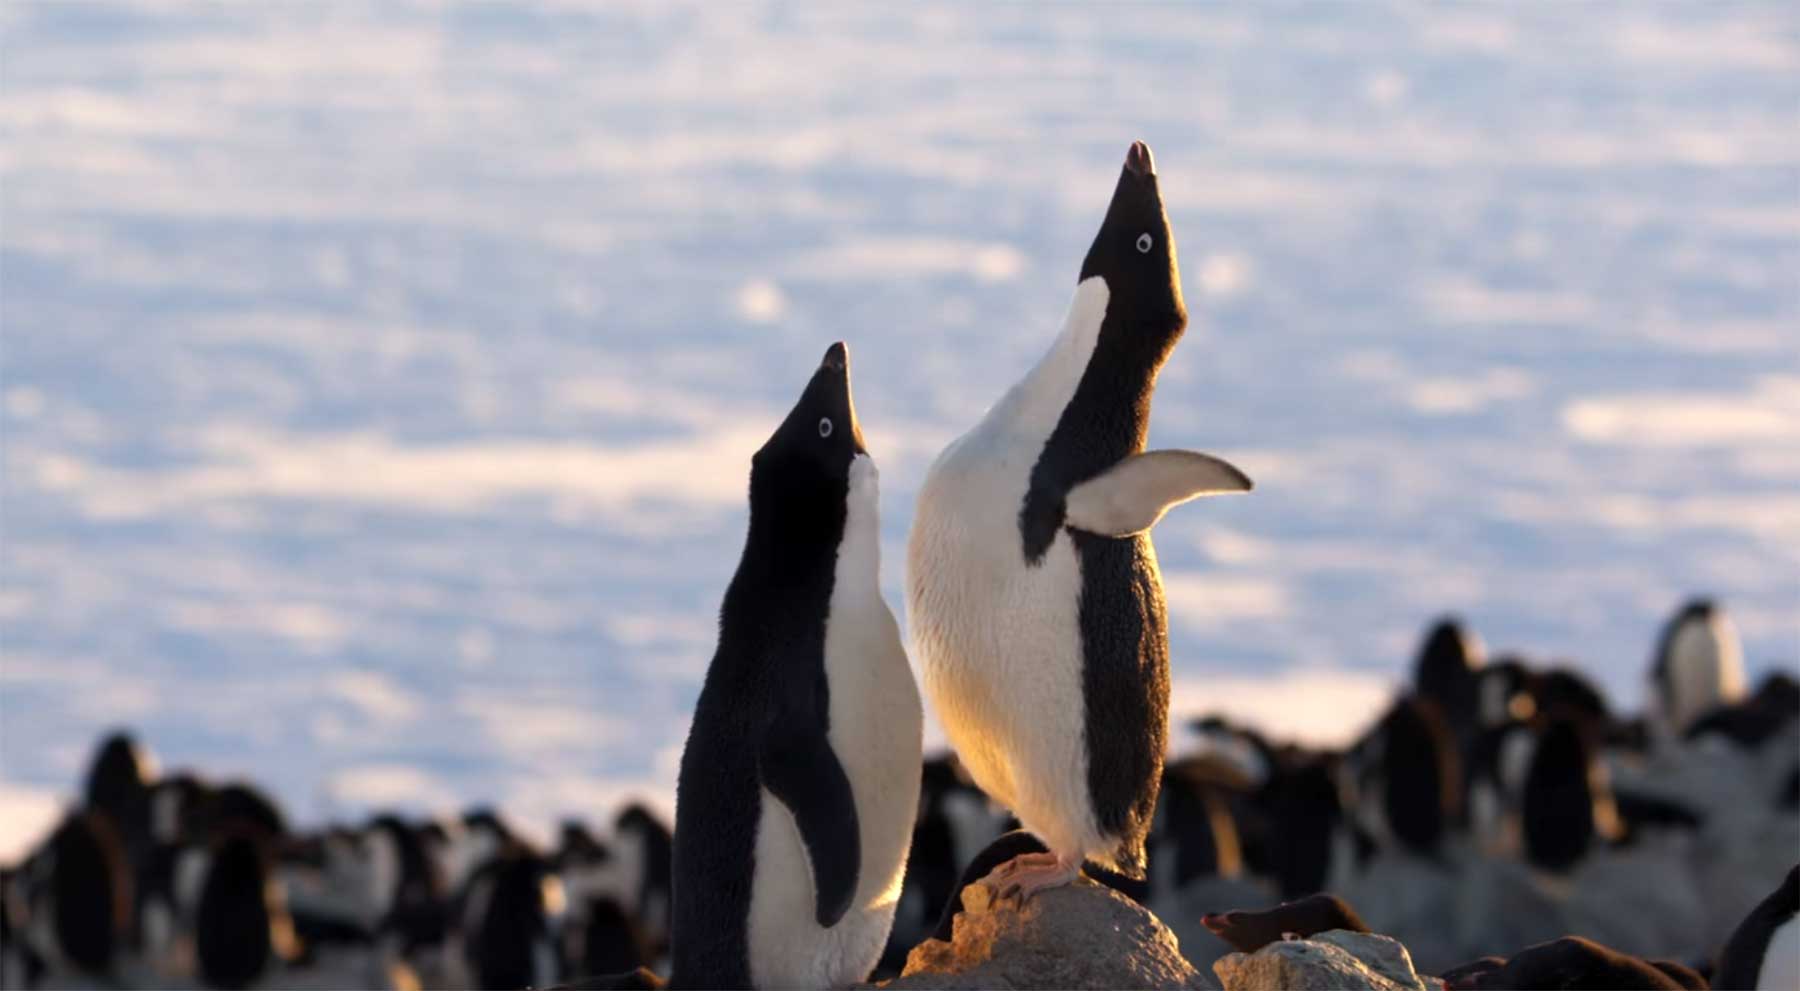 Trailer zur Tierdokumentation "Penguins" penguins-dokumentation-trailer 